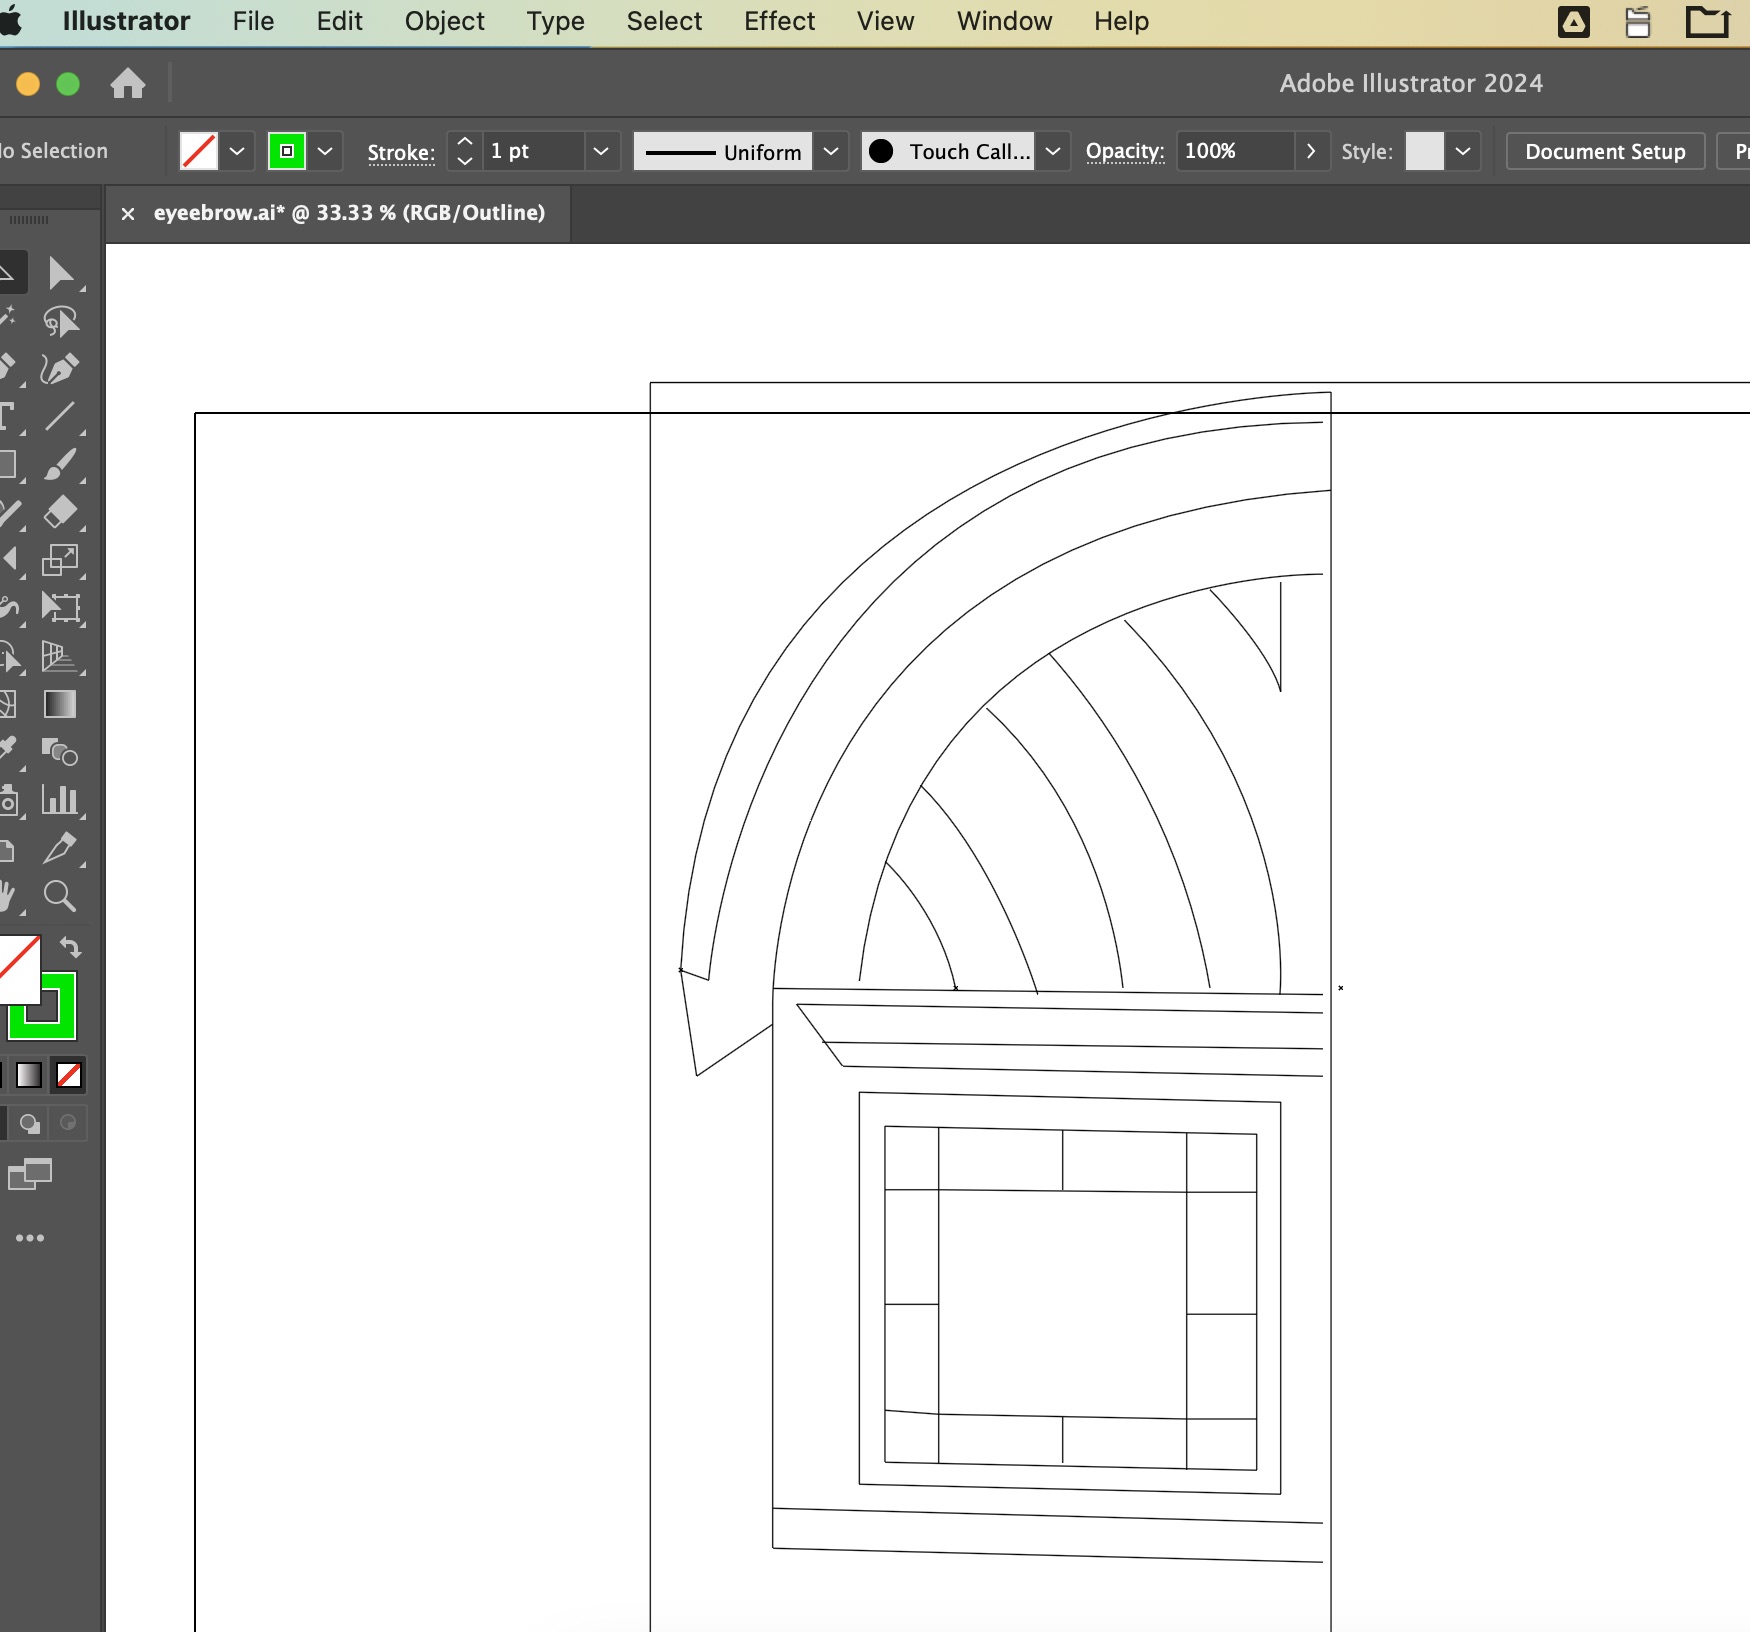 Adobe Illustrator Dormer with Background Removed